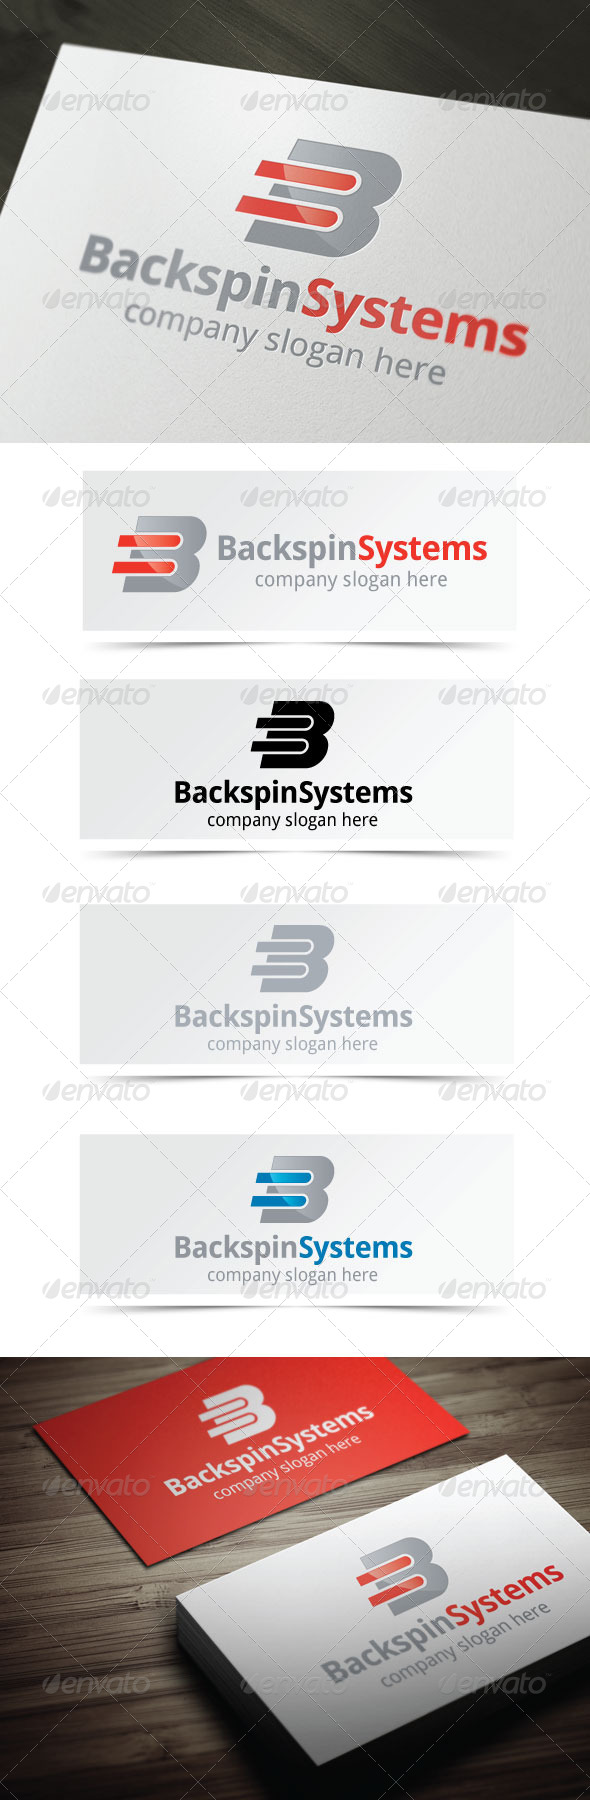 Backspin Systems